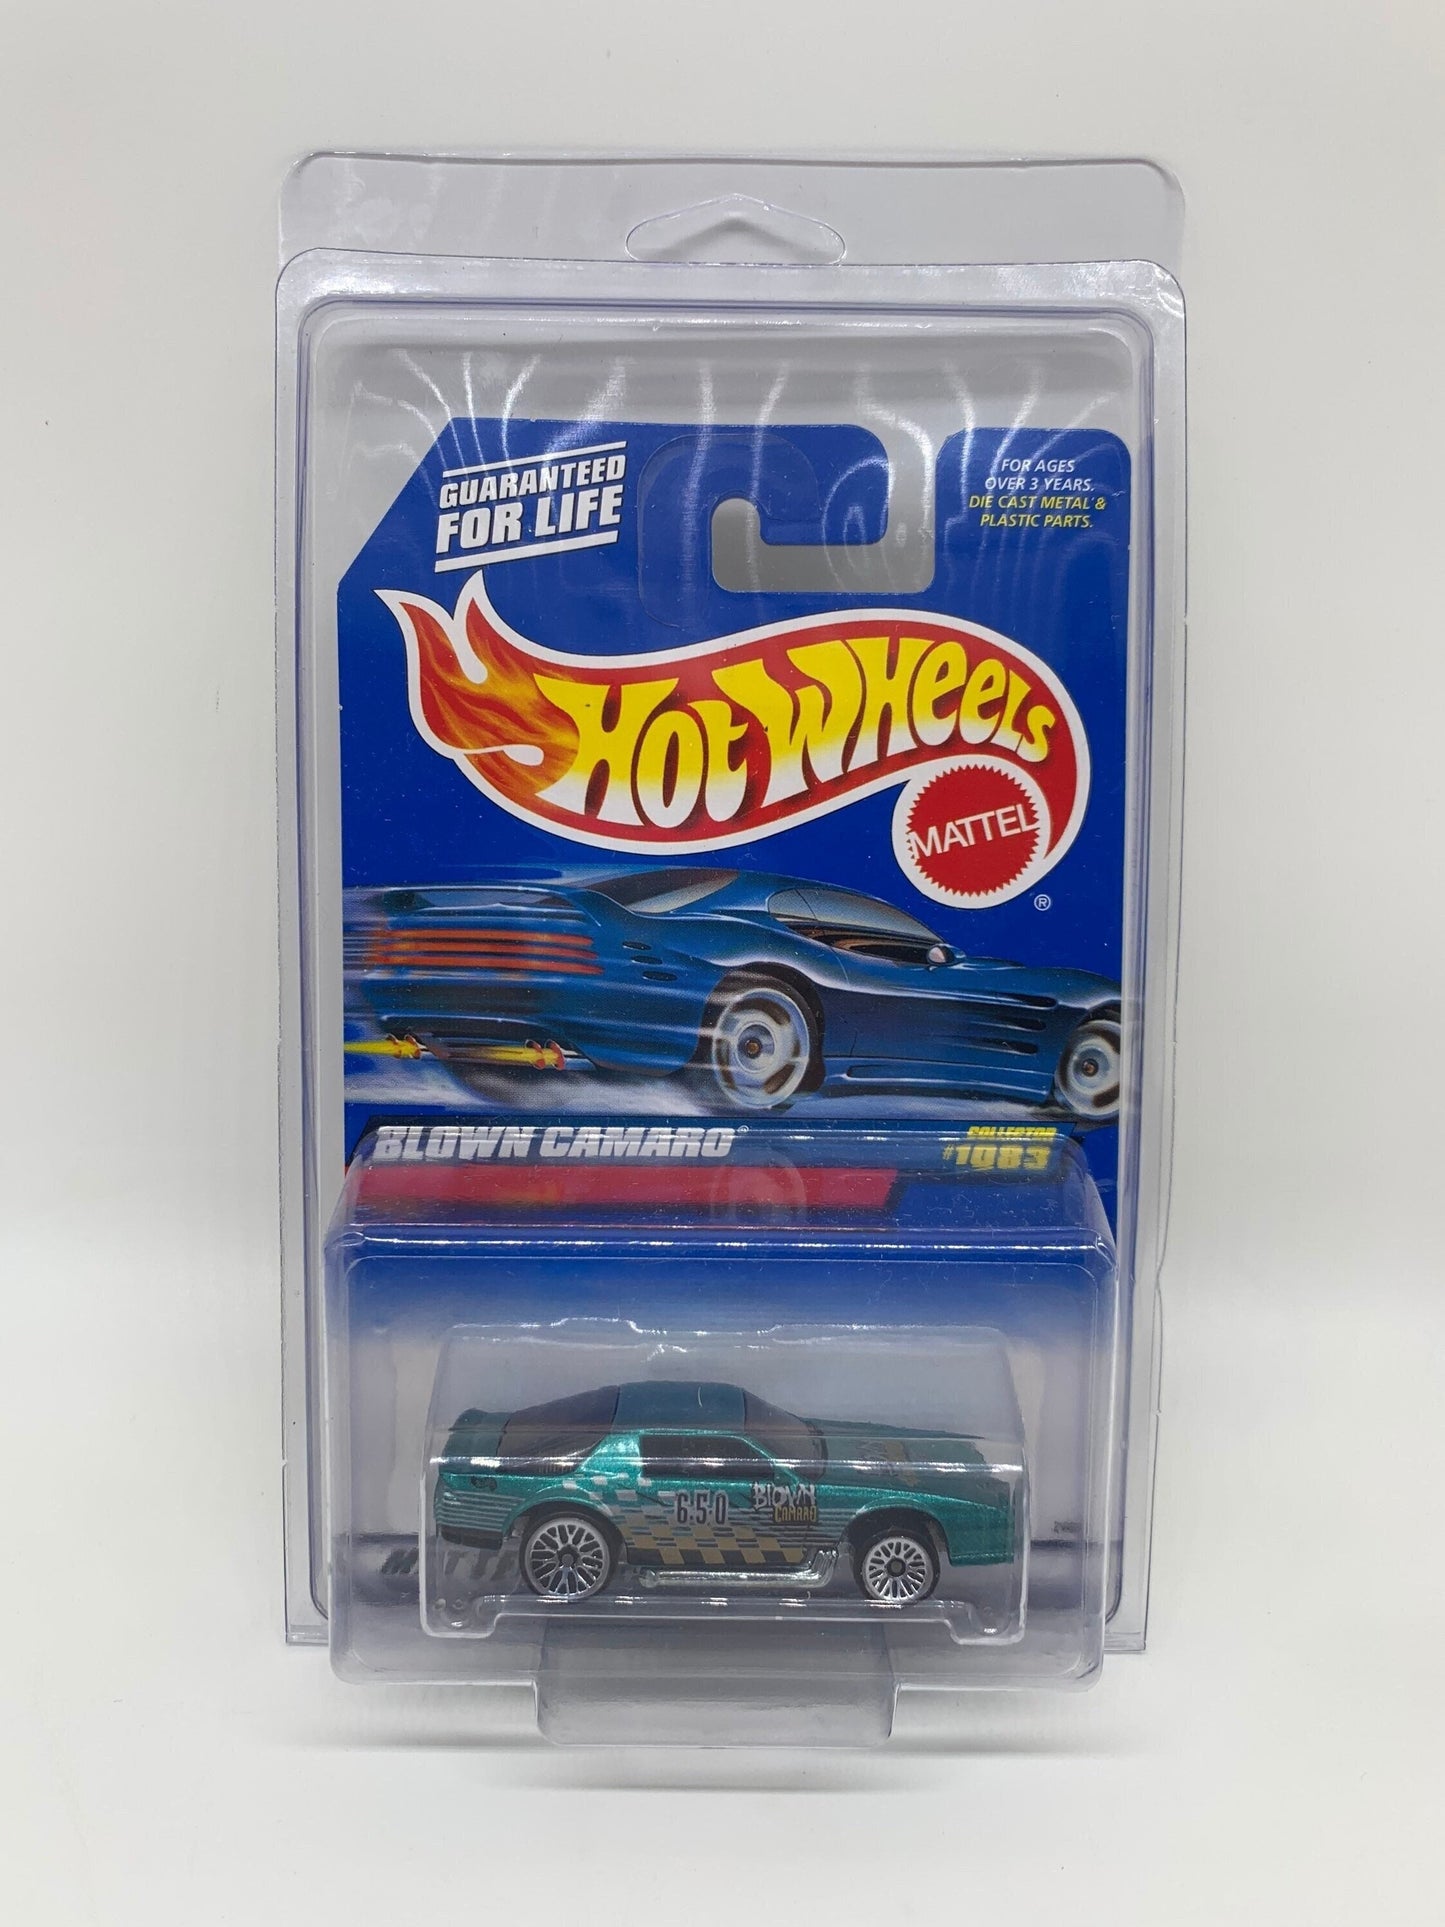 Hot Wheels Blown Camaro Metallic Aqua Mainline Collector #1083 Miniature Collectable Model Toy Car Perfect Birthday Gift